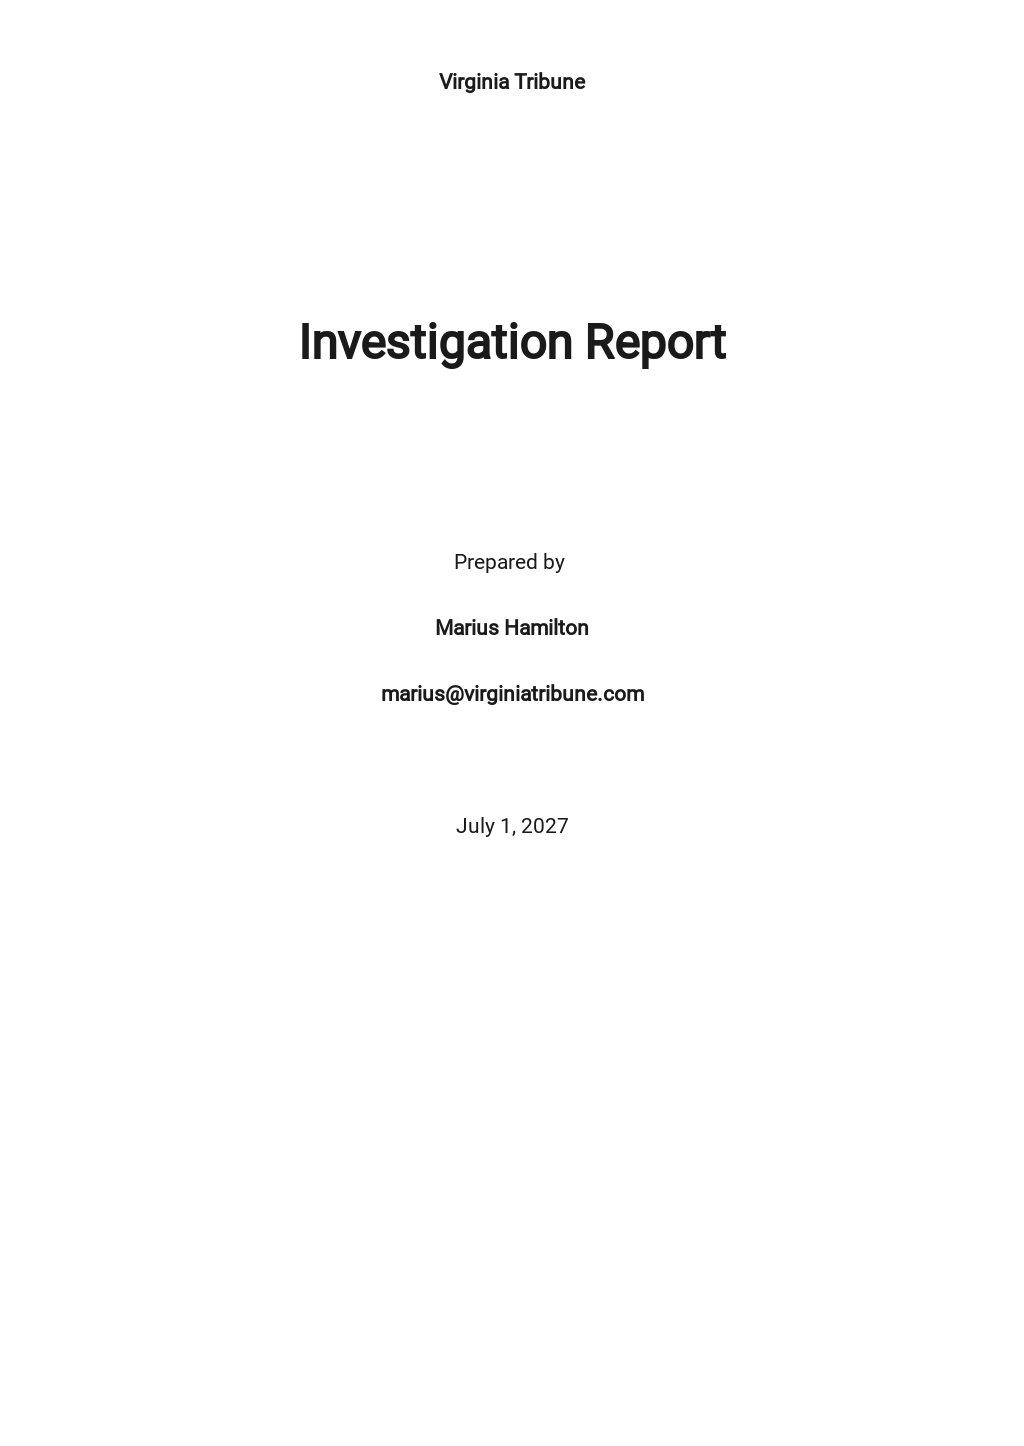 HR Internal Investigation Report Template in Google Docs, Word